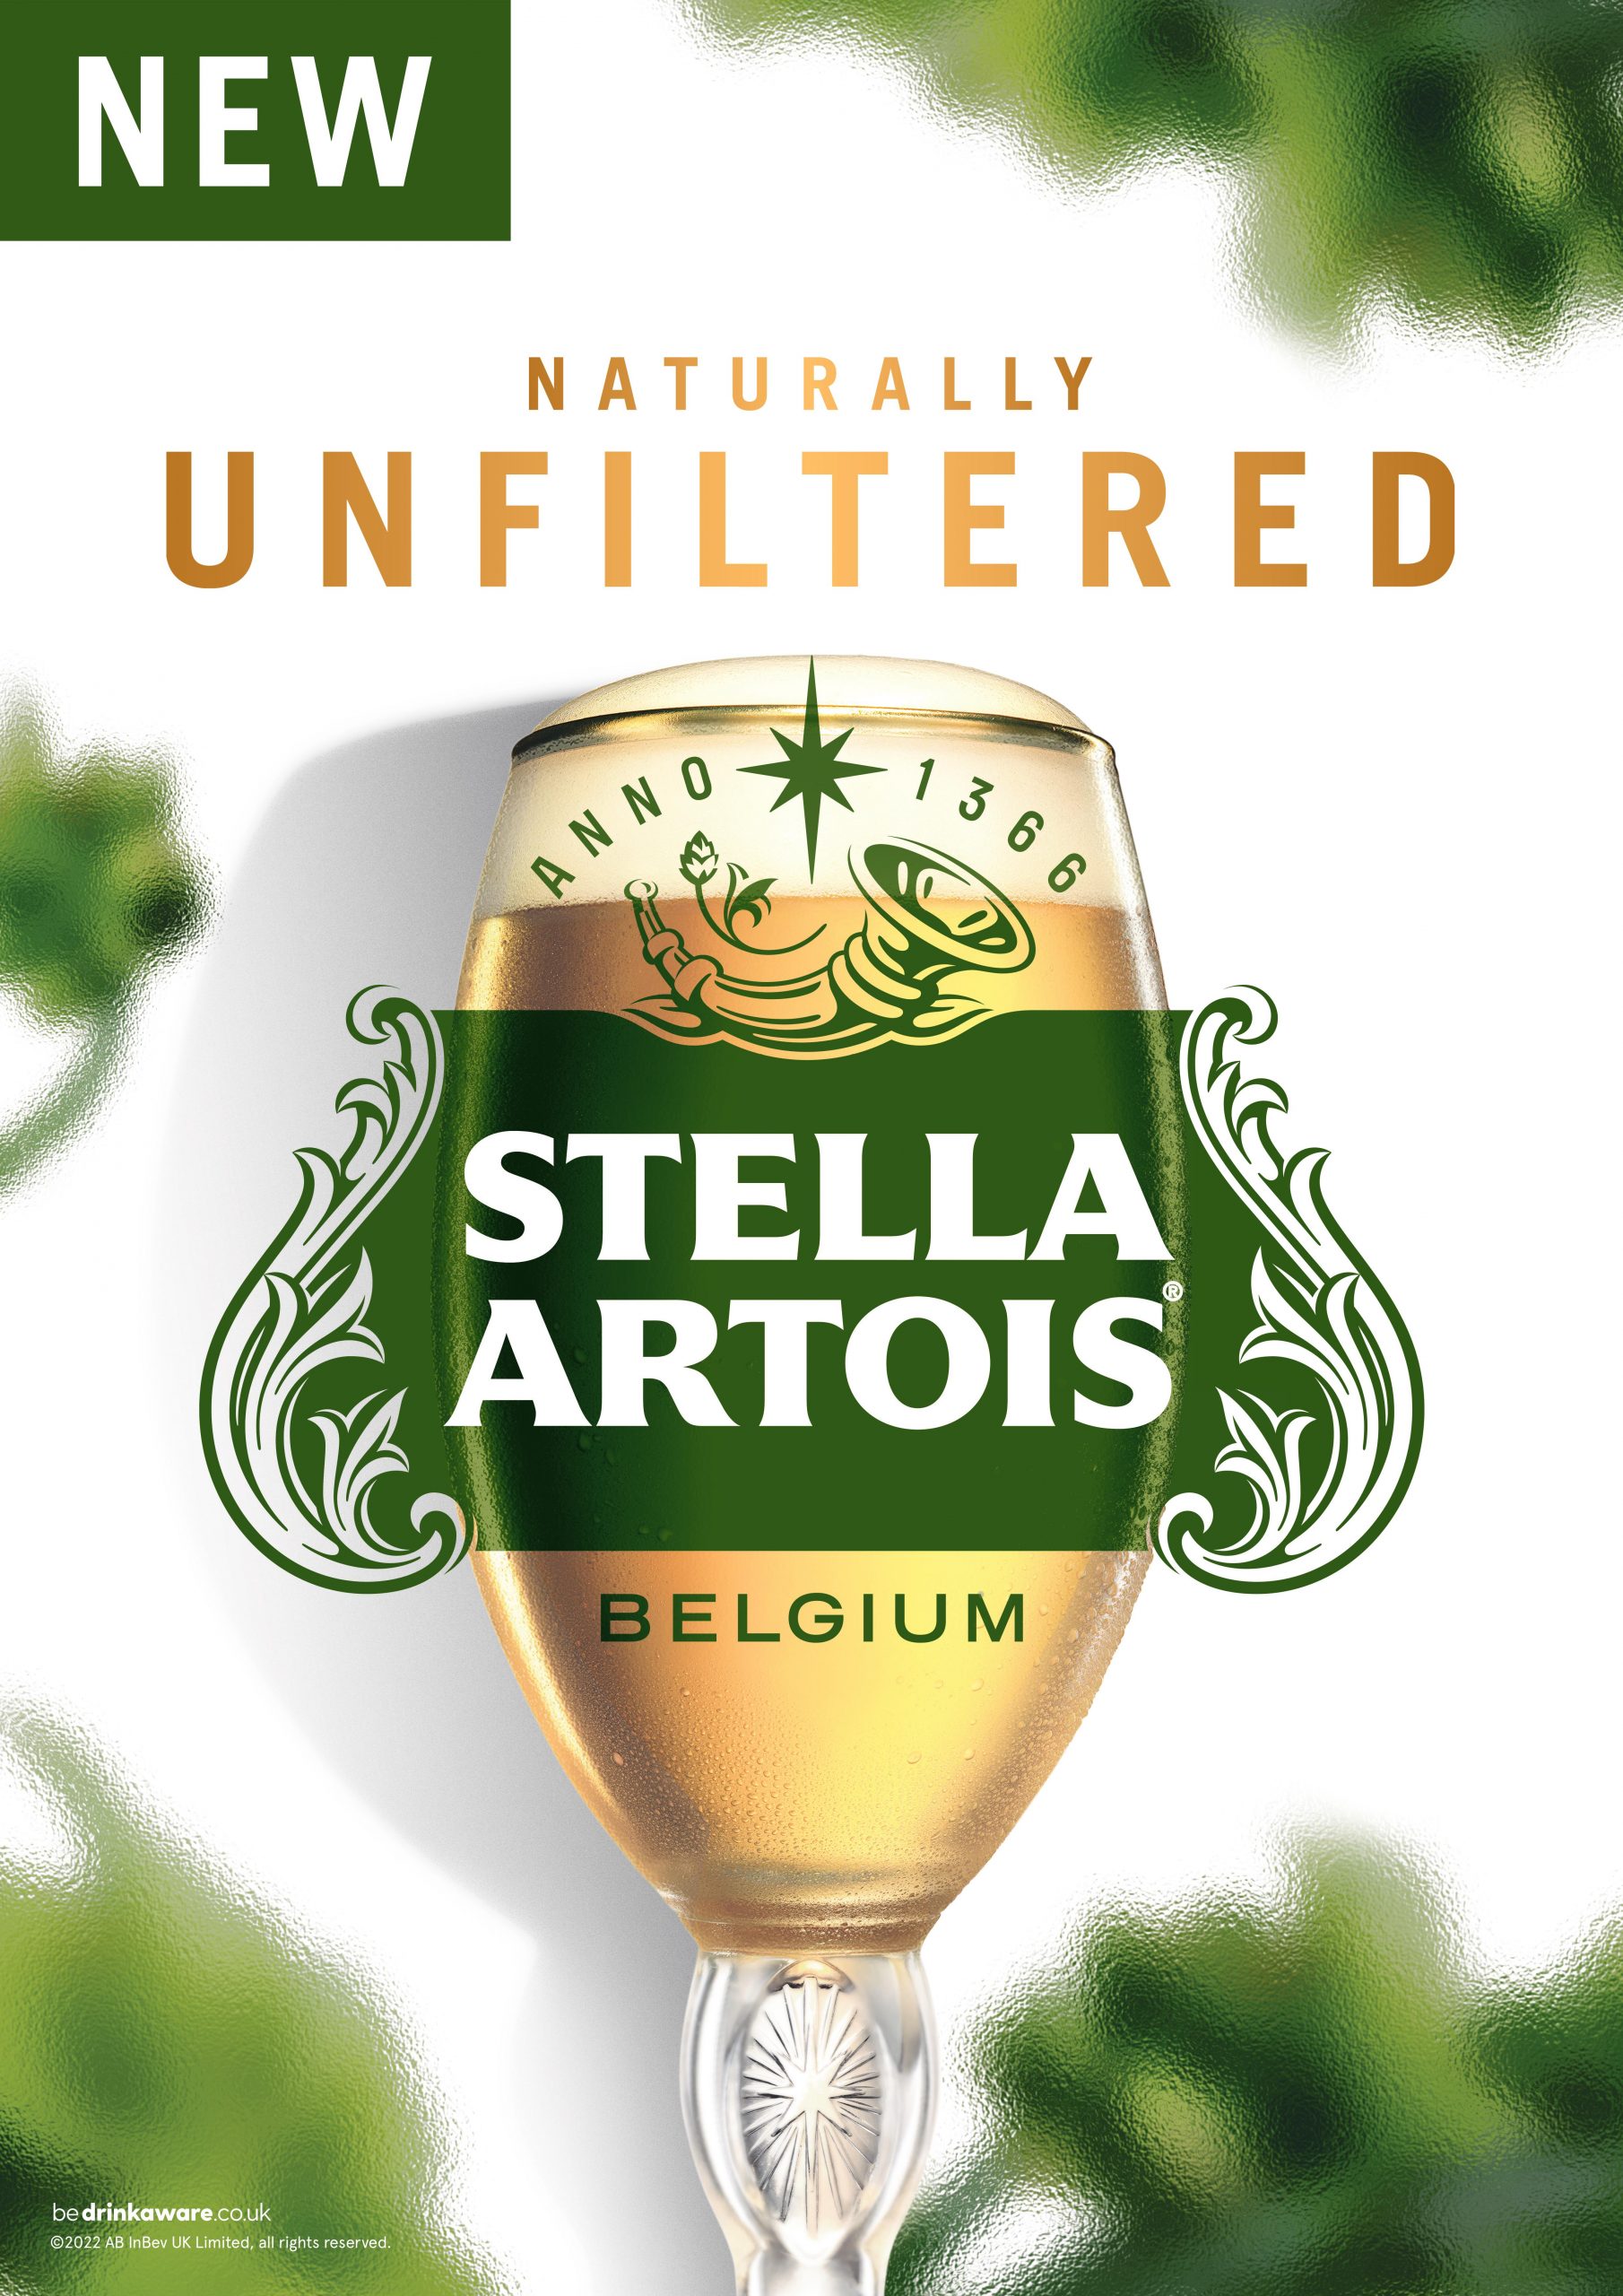 Stella Artois launches new super-premium unfiltered lager